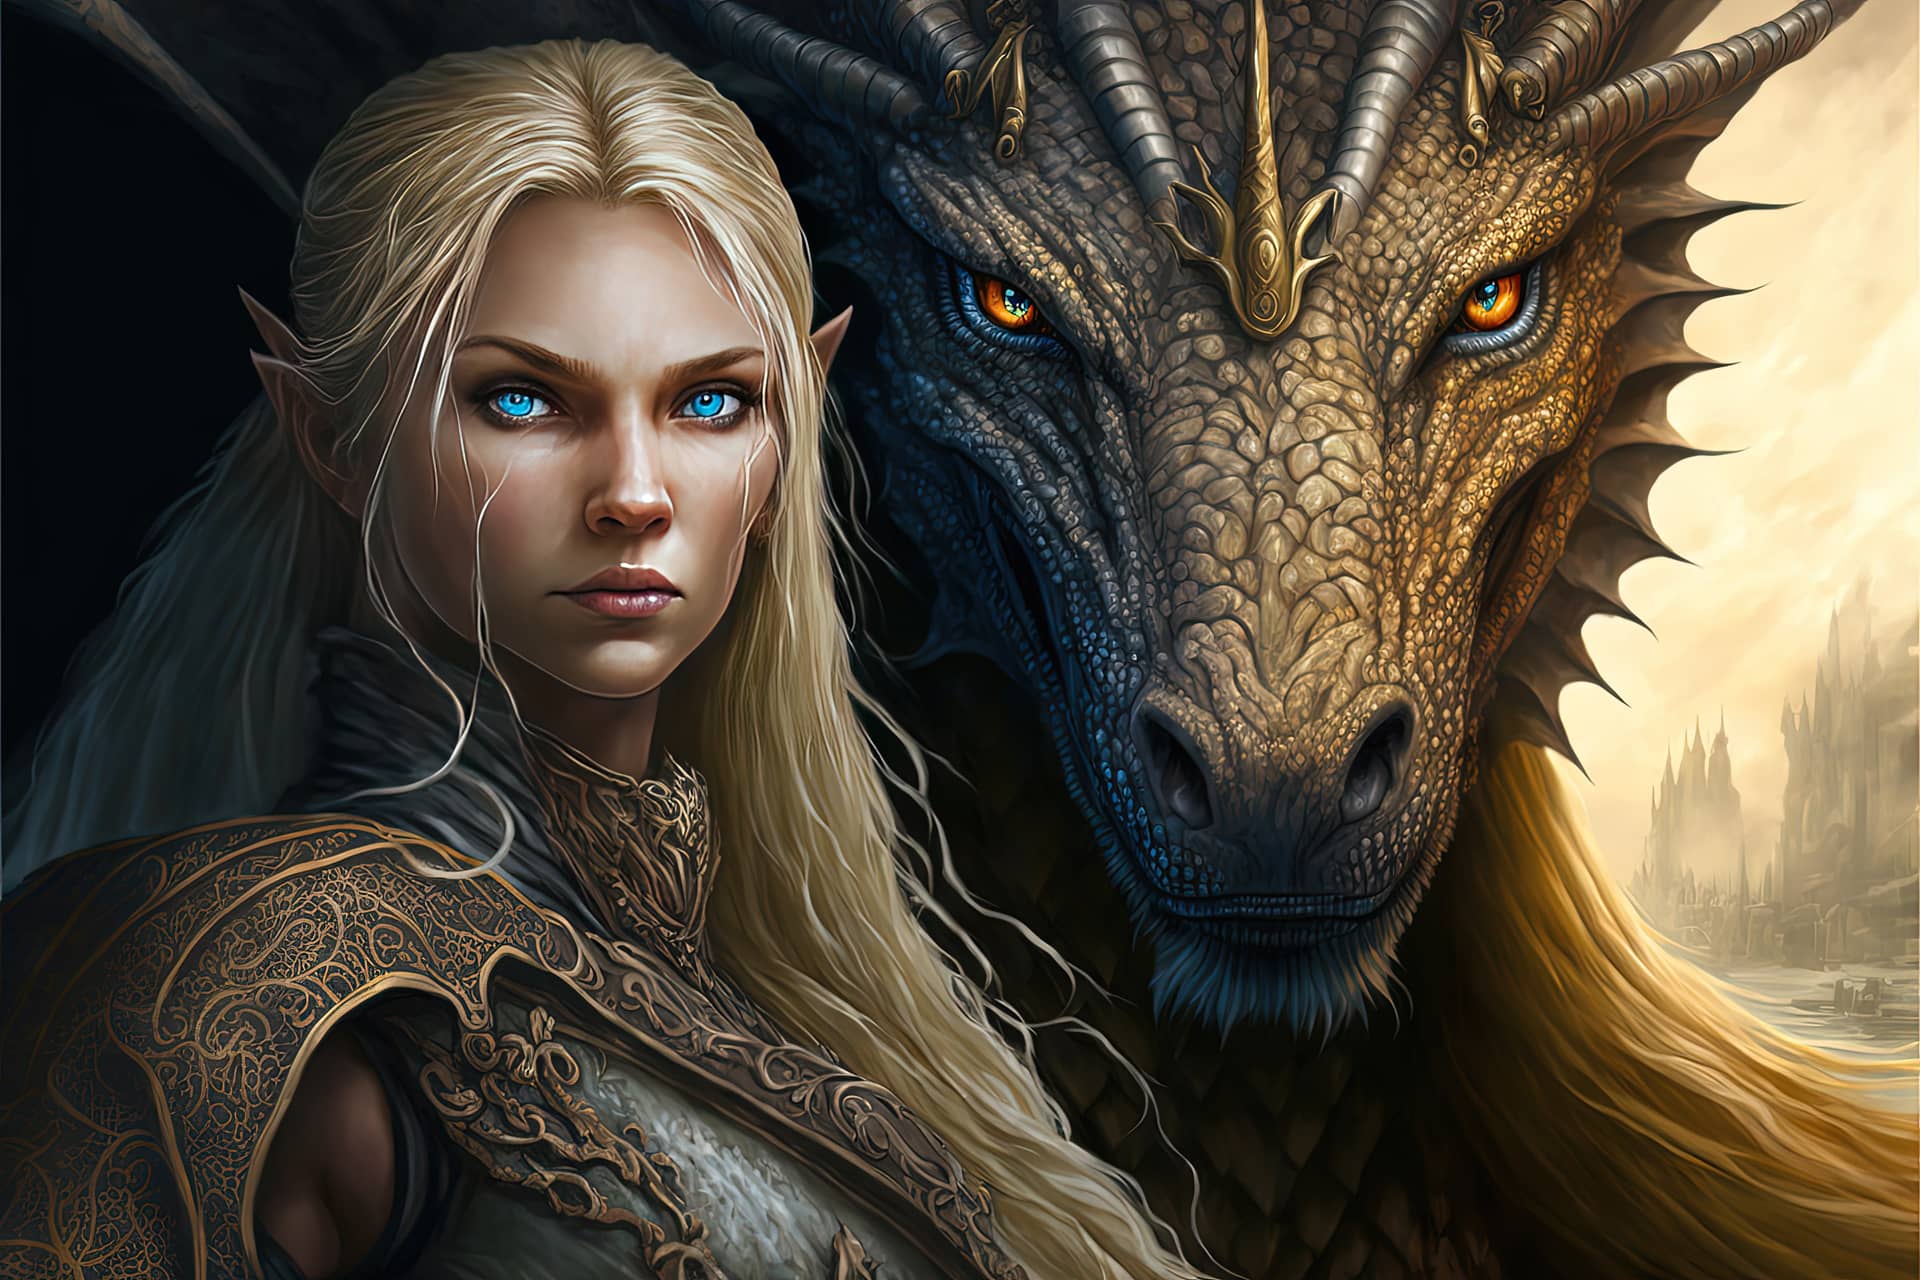 Dragon pet fantasy creature cool images for profile